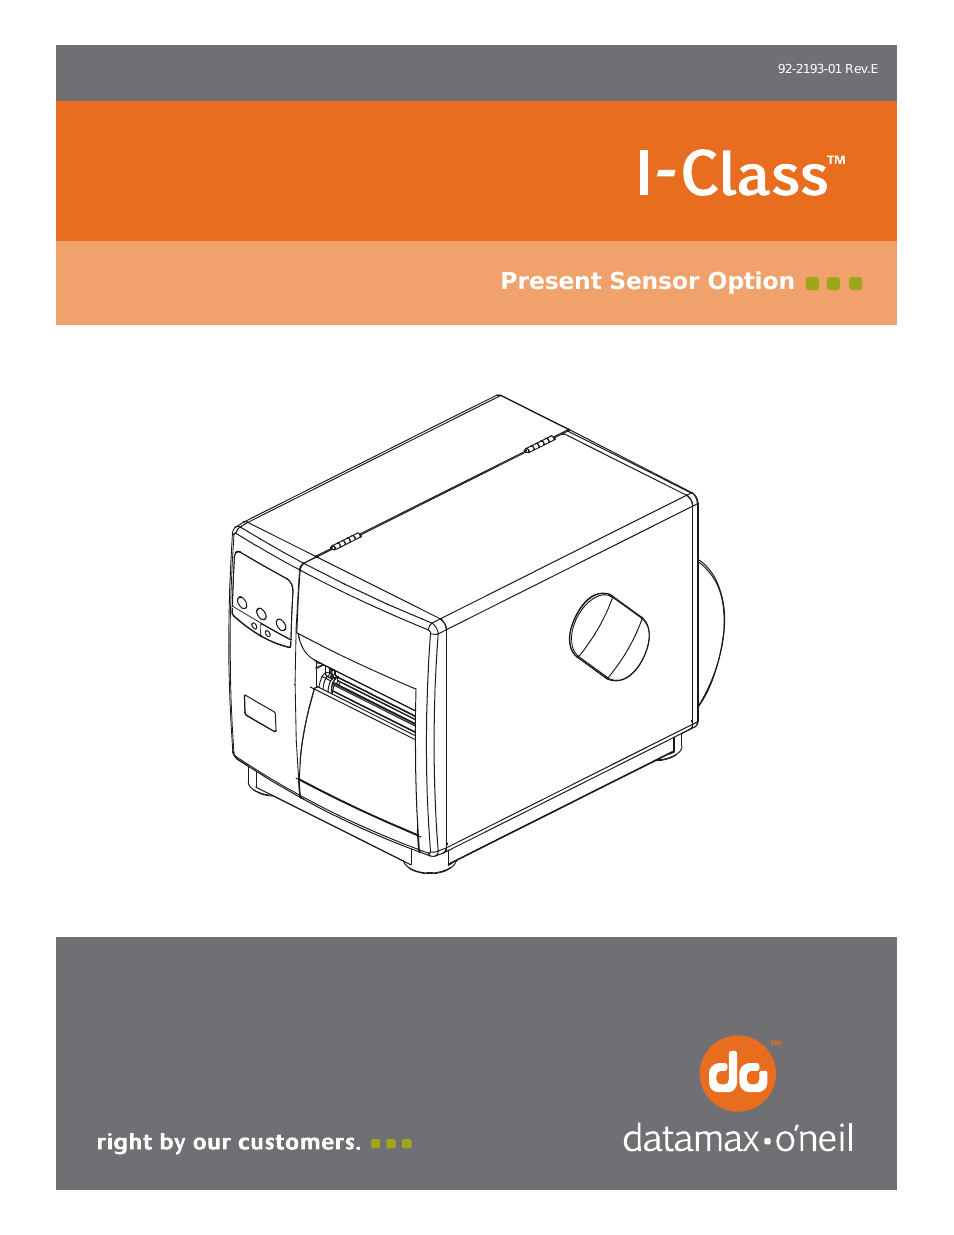 I-Class Present Sensor Option